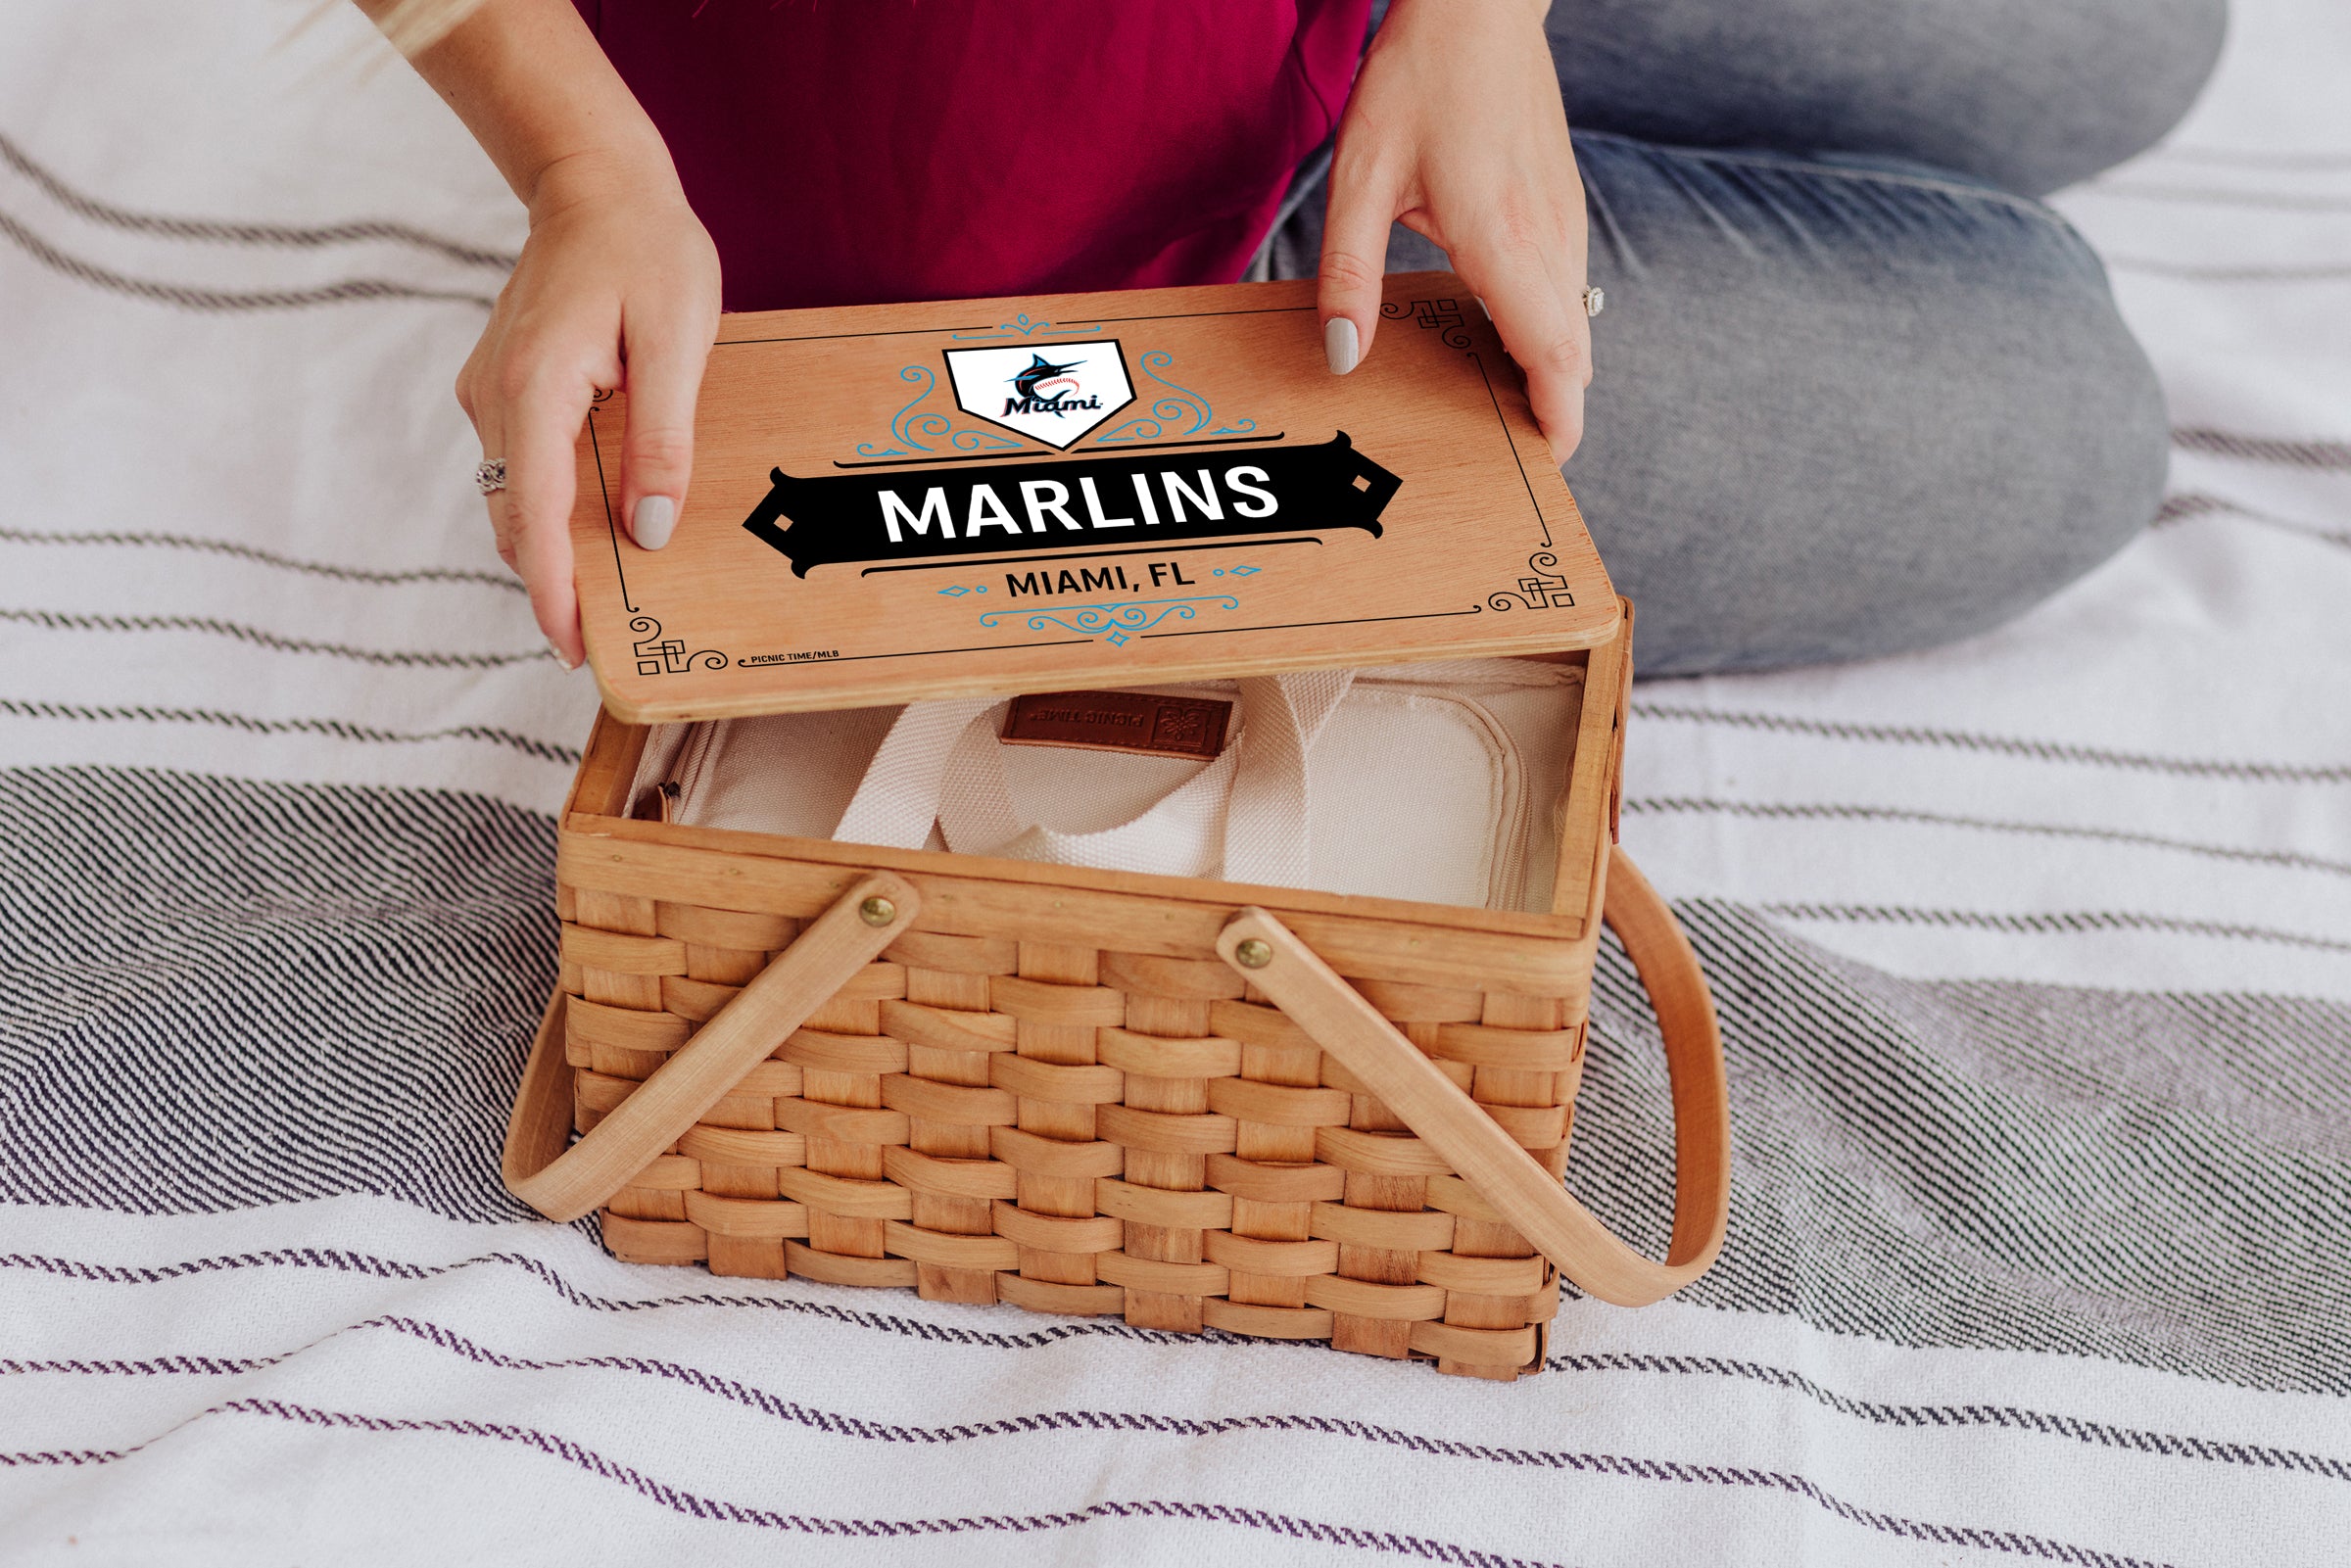 Miami Marlins - Poppy Personal Picnic Basket